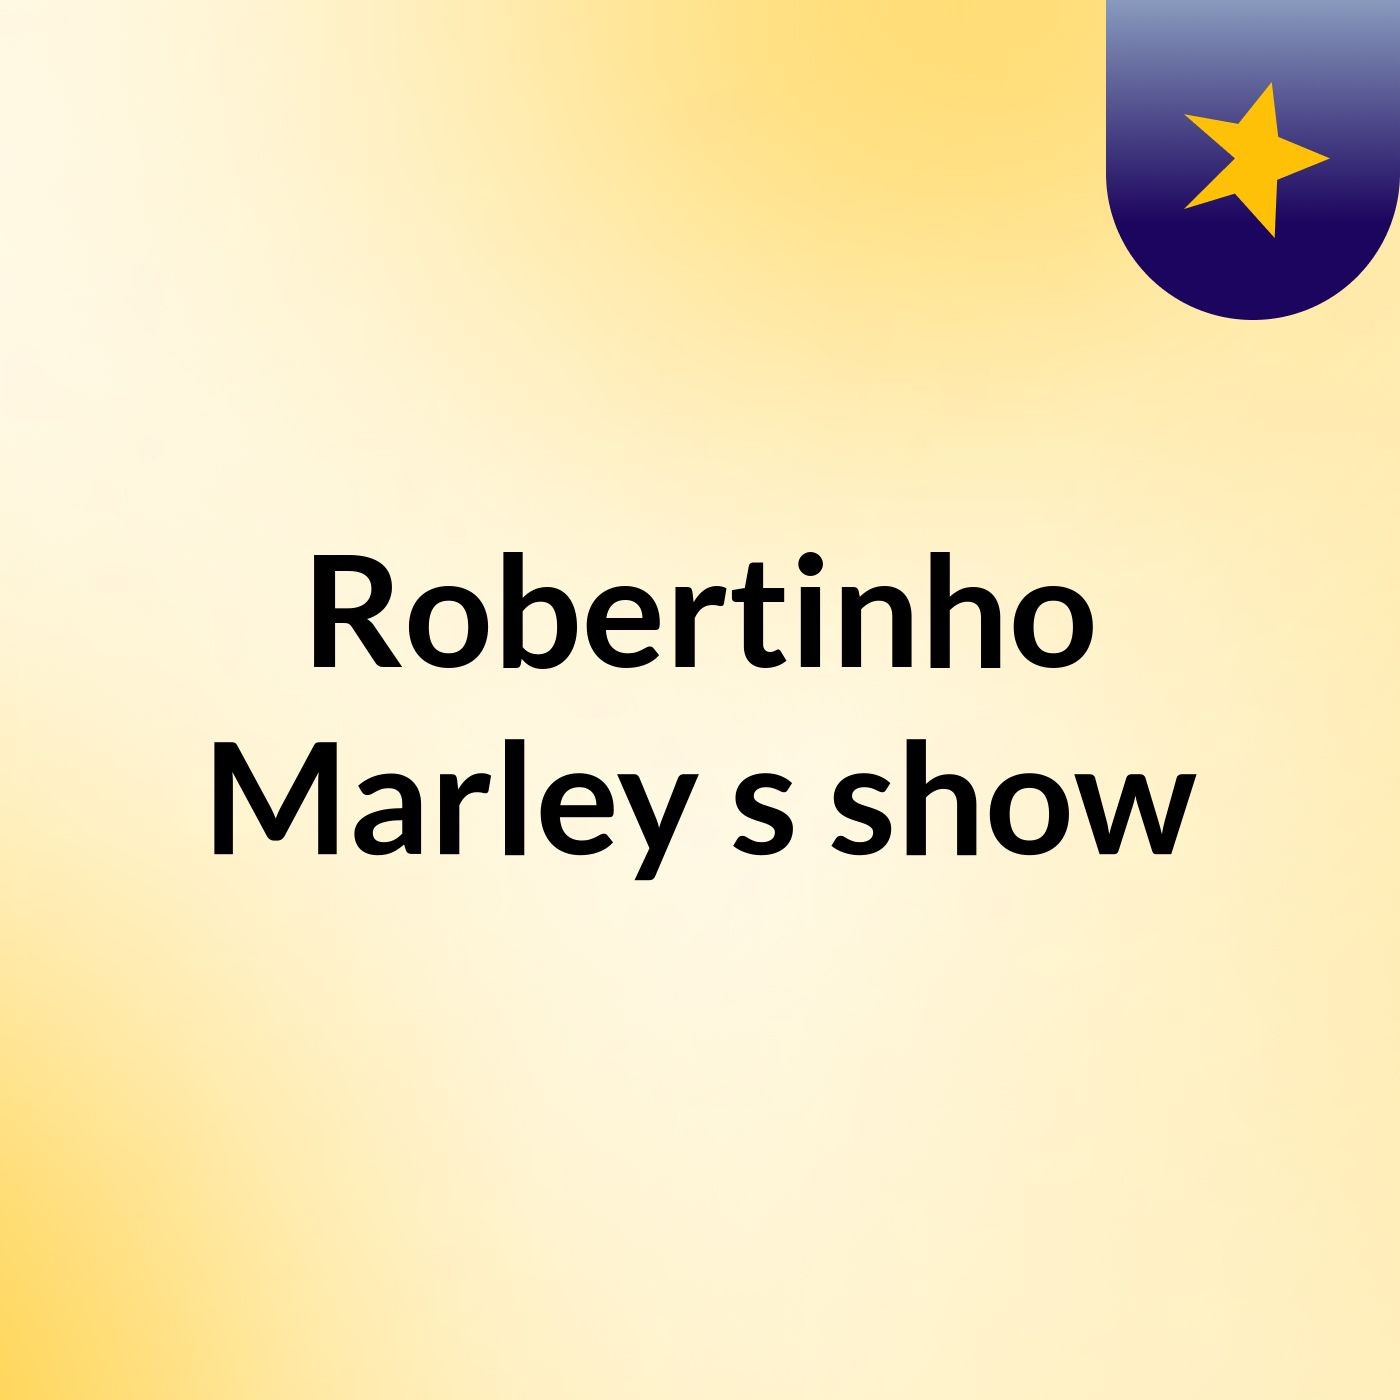 Robertinho Marley's show